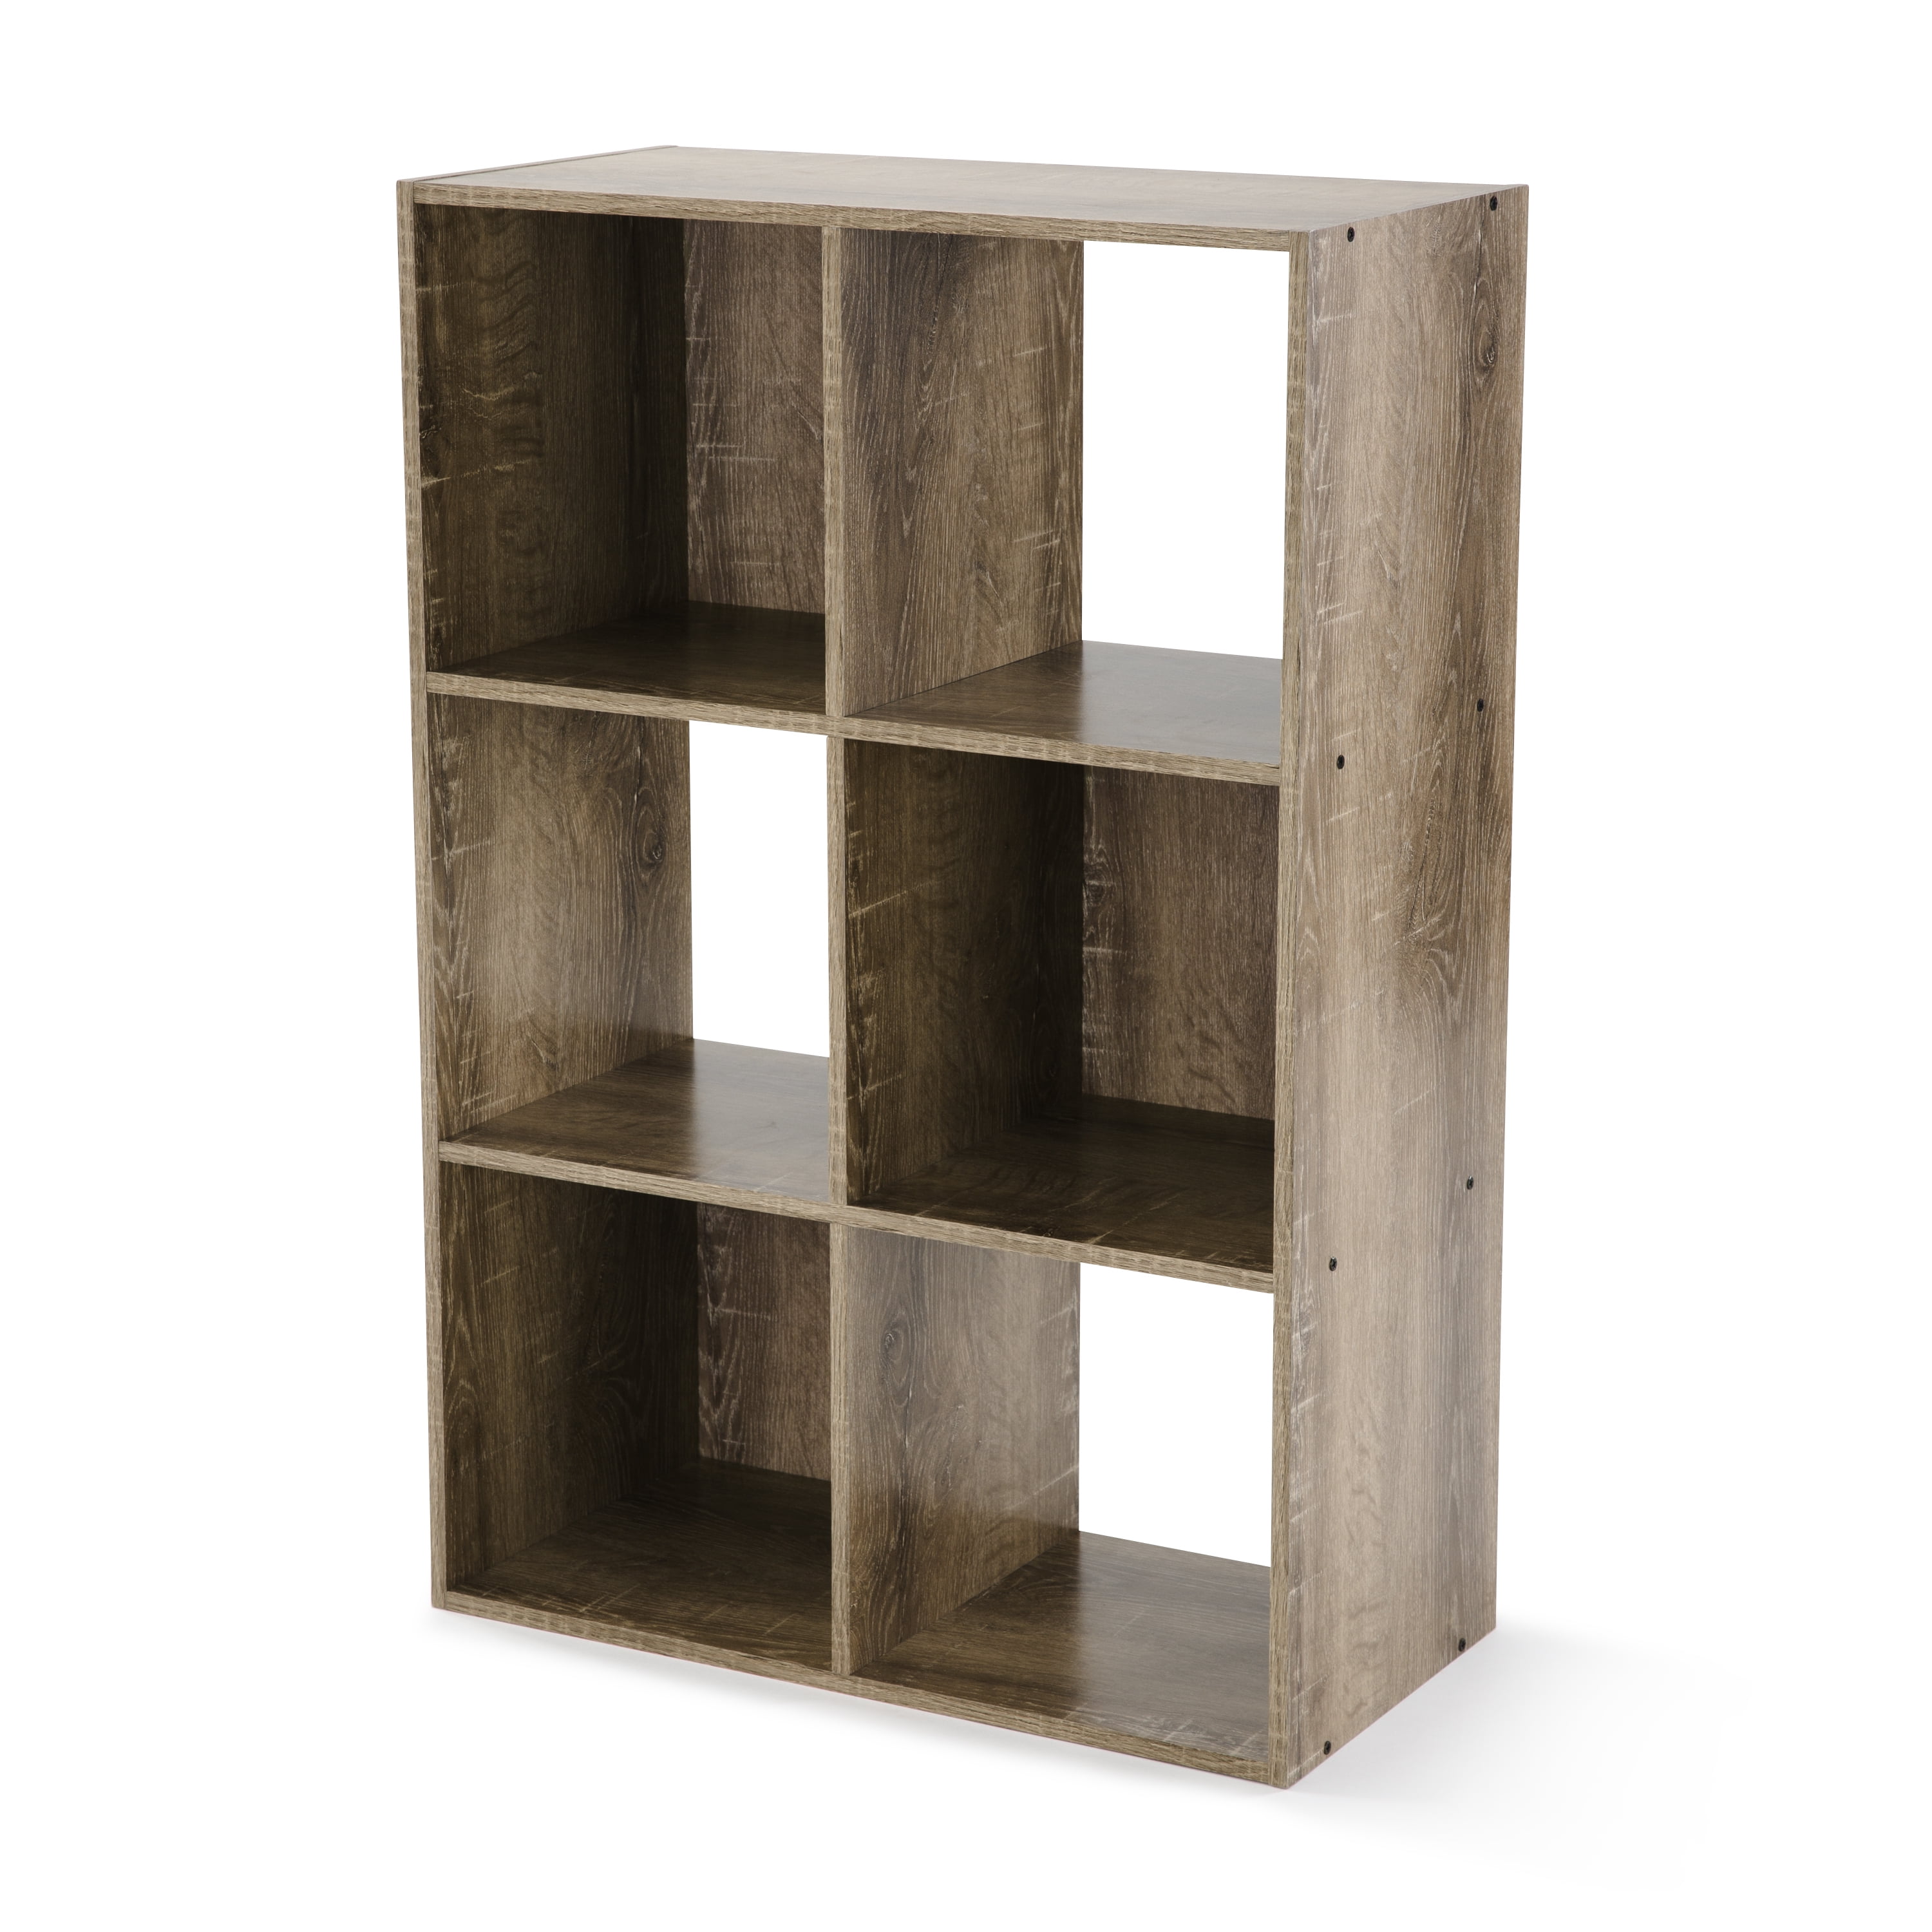 8 Cube Storage Organizer Bookcase Home Office Display Bookshelf Shelves Rustic 